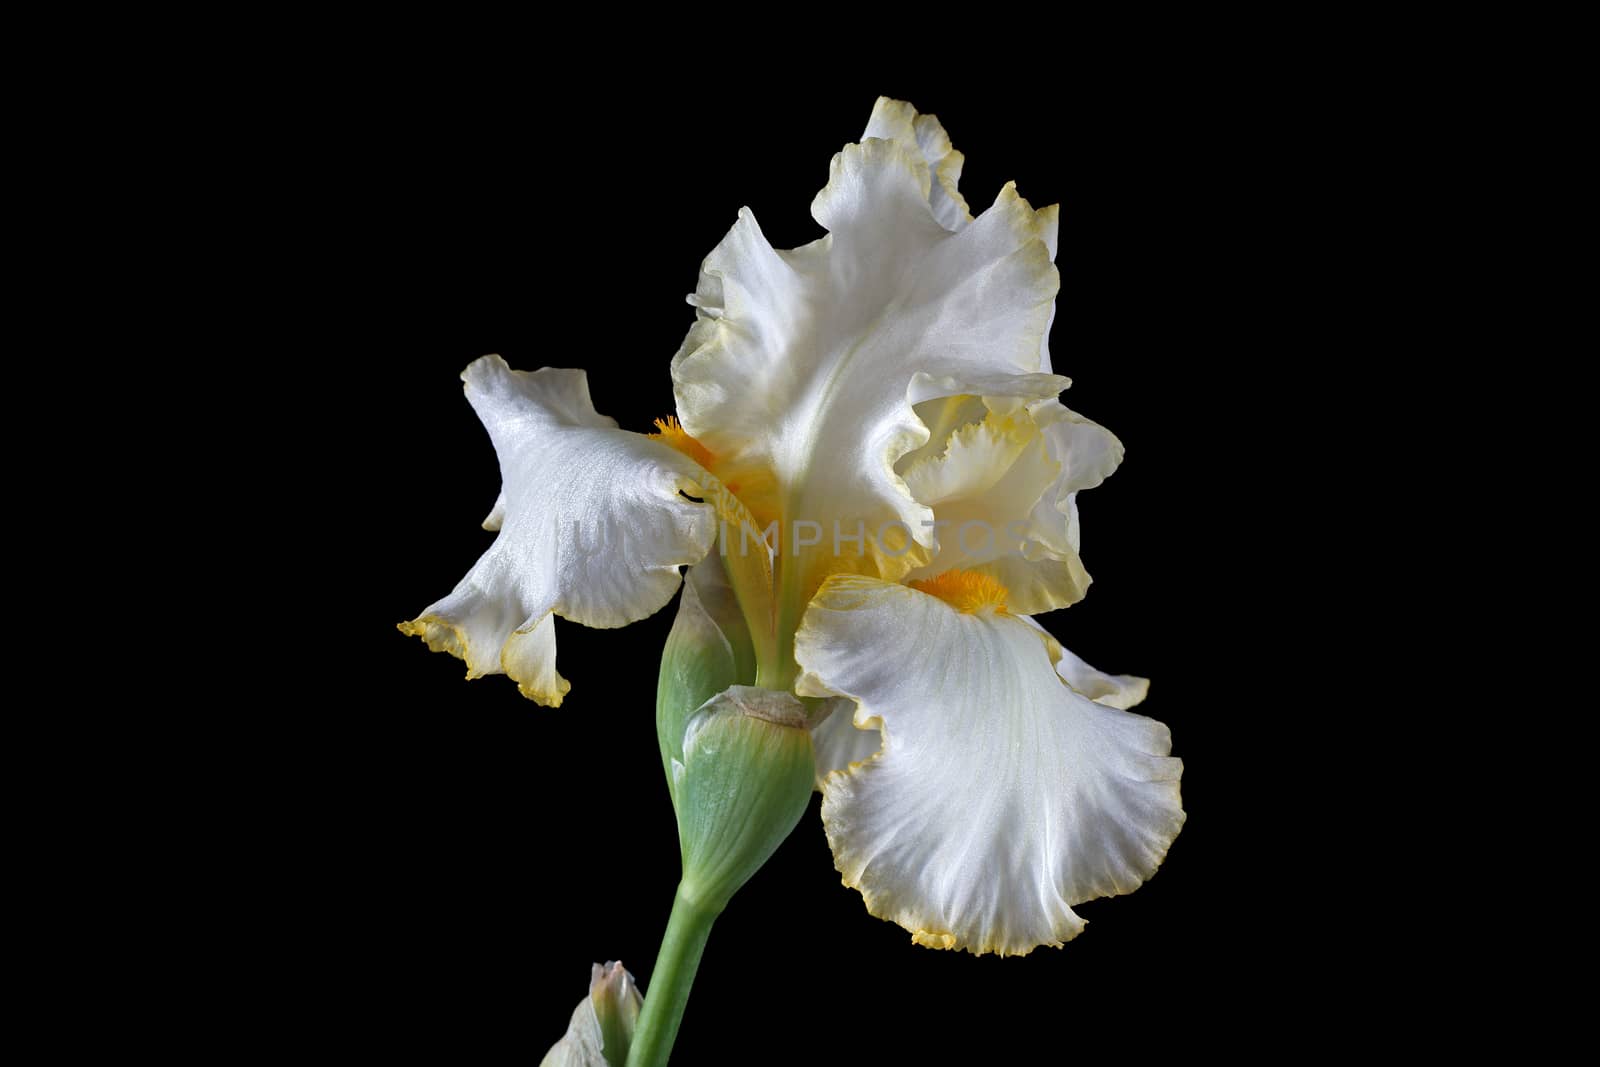 Flower of iris, lat. Iris, isolated on black backgrounds